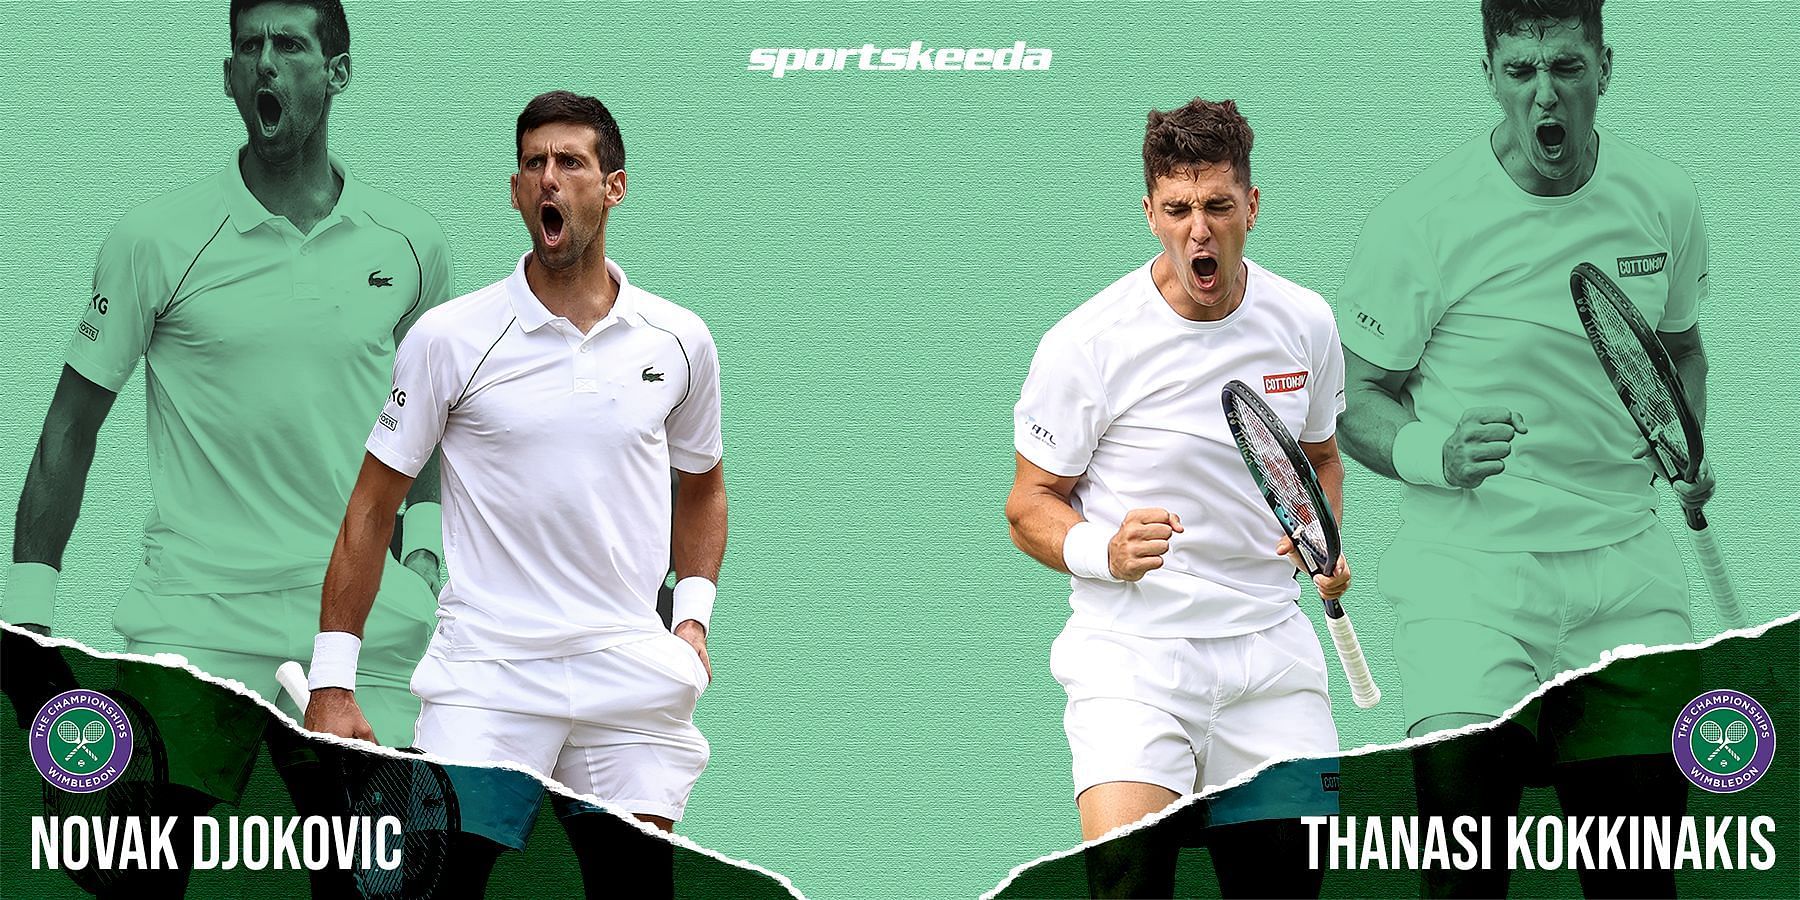 Novak Djokovic will take on Thanasi Kokkinakis in the second round of Wimbledon